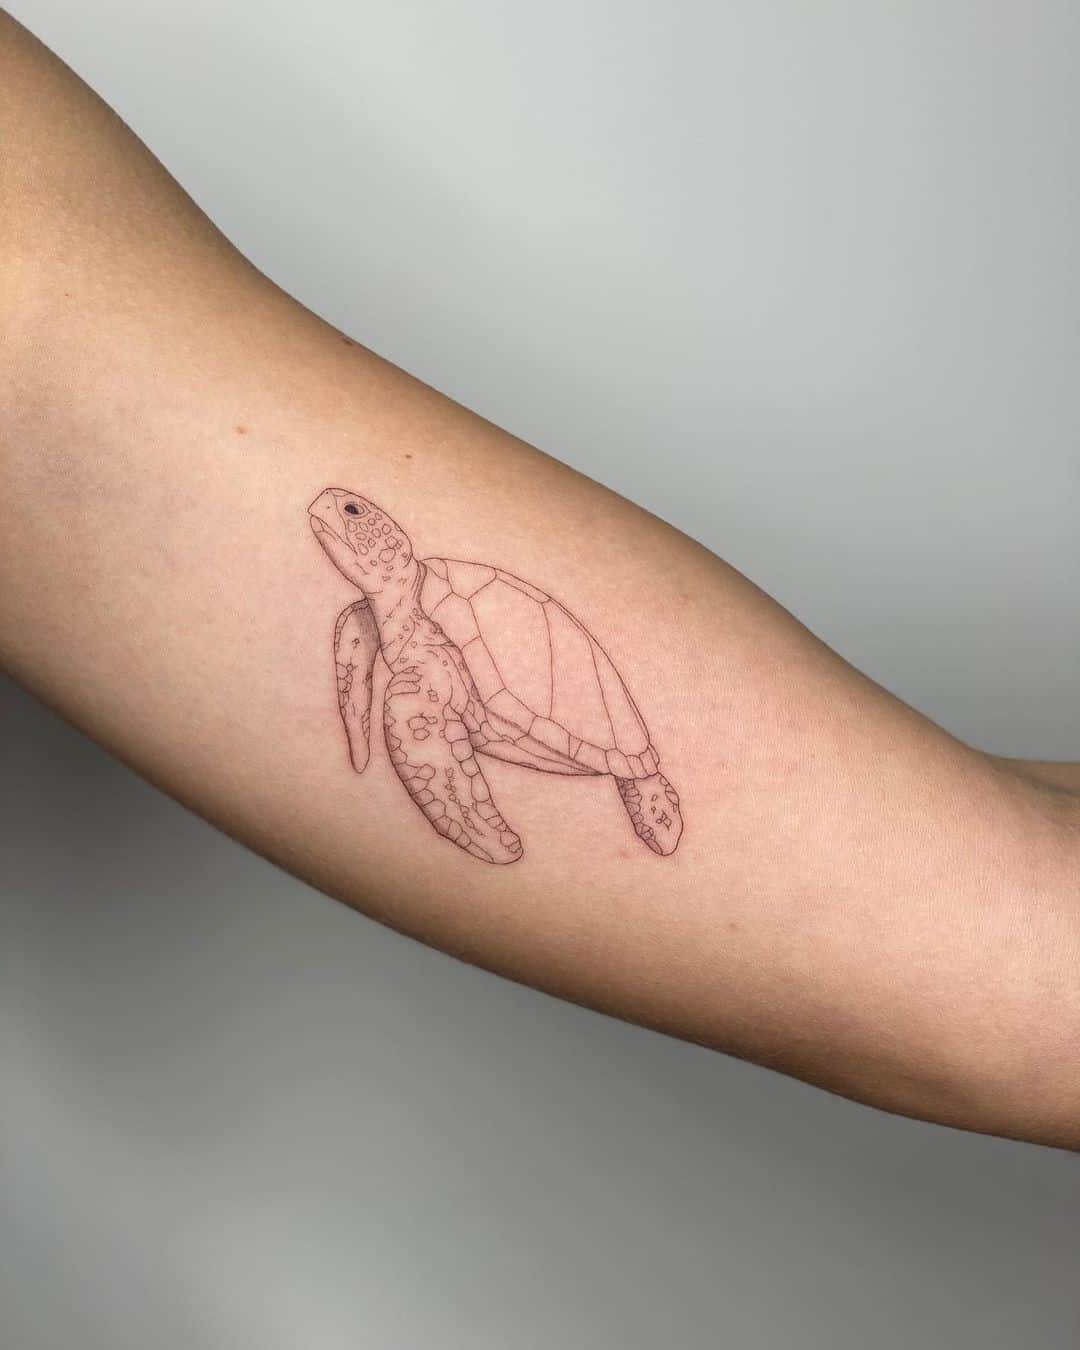 18 Turtle Tattoos For Wrist